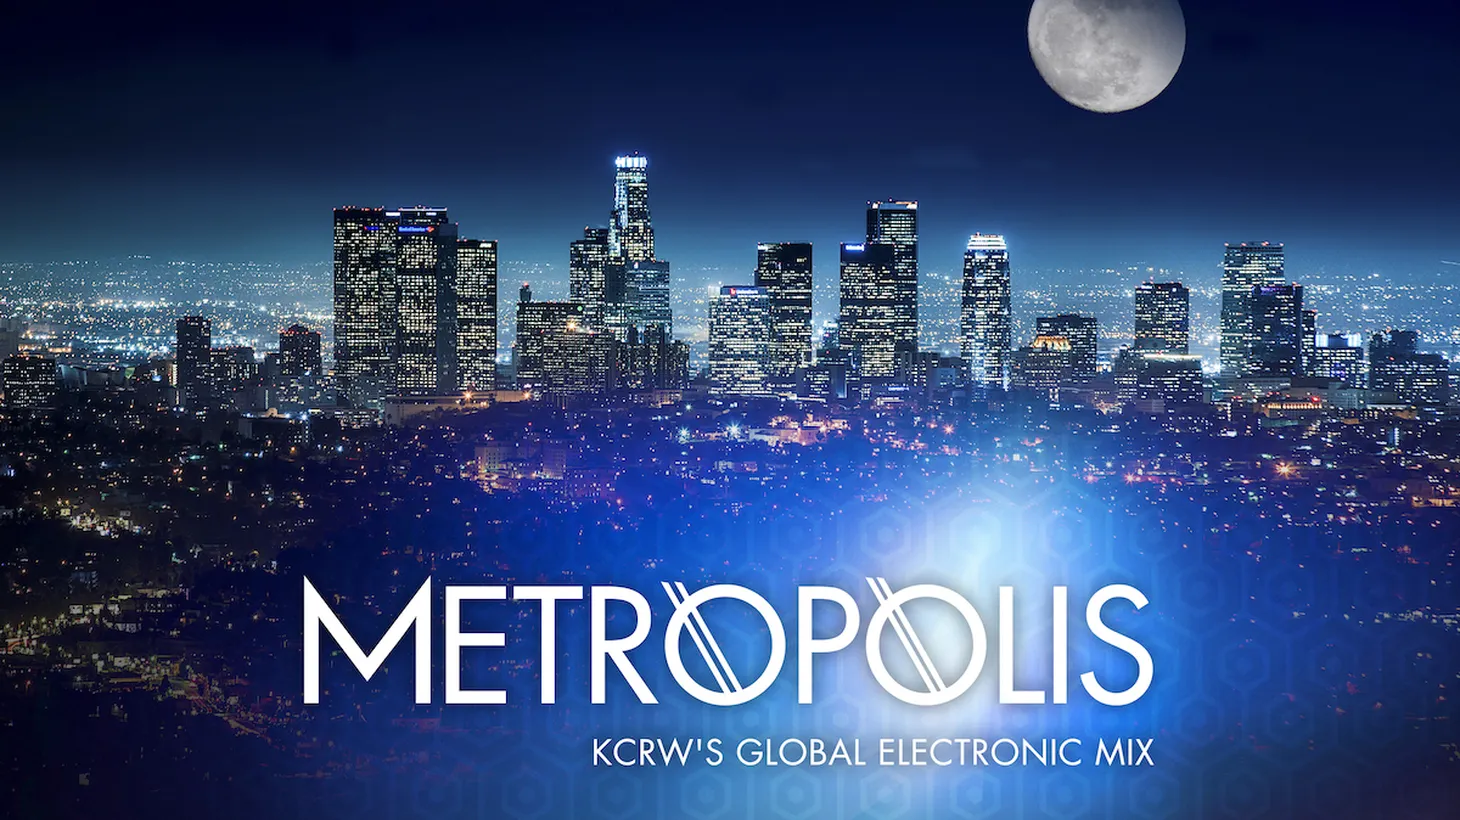 Metropolis playlist, July 10, 2021.